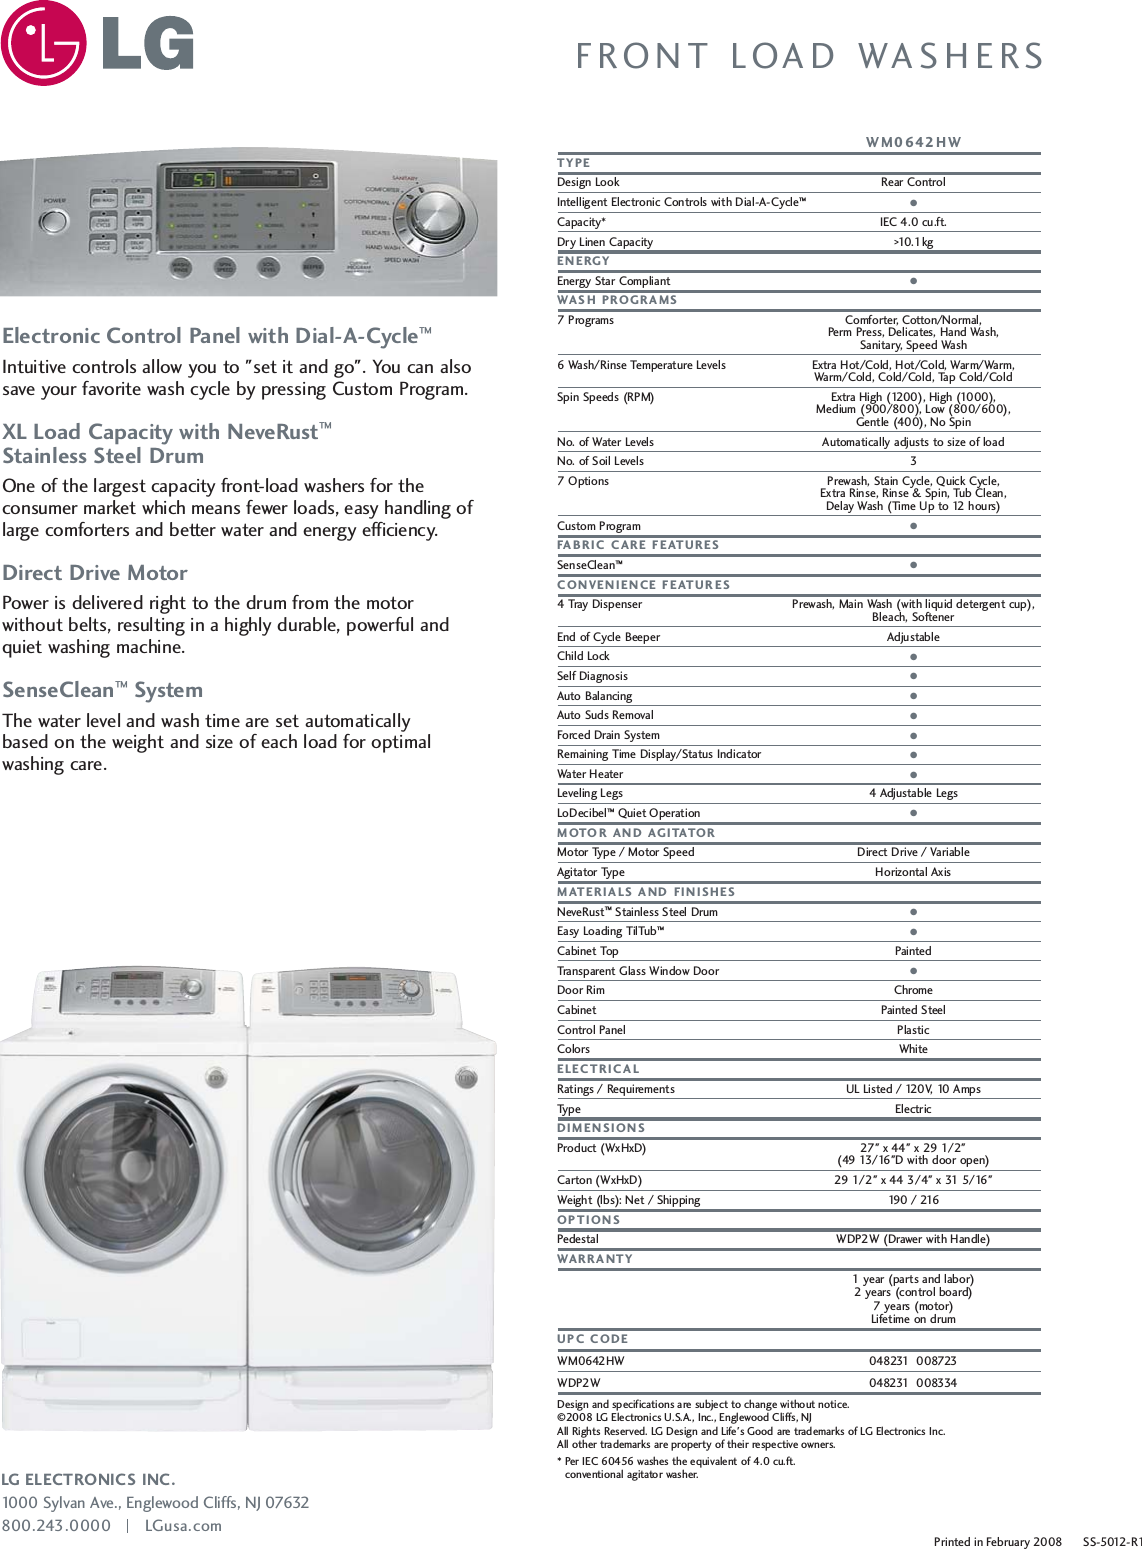 Lg front load washer manual pdf